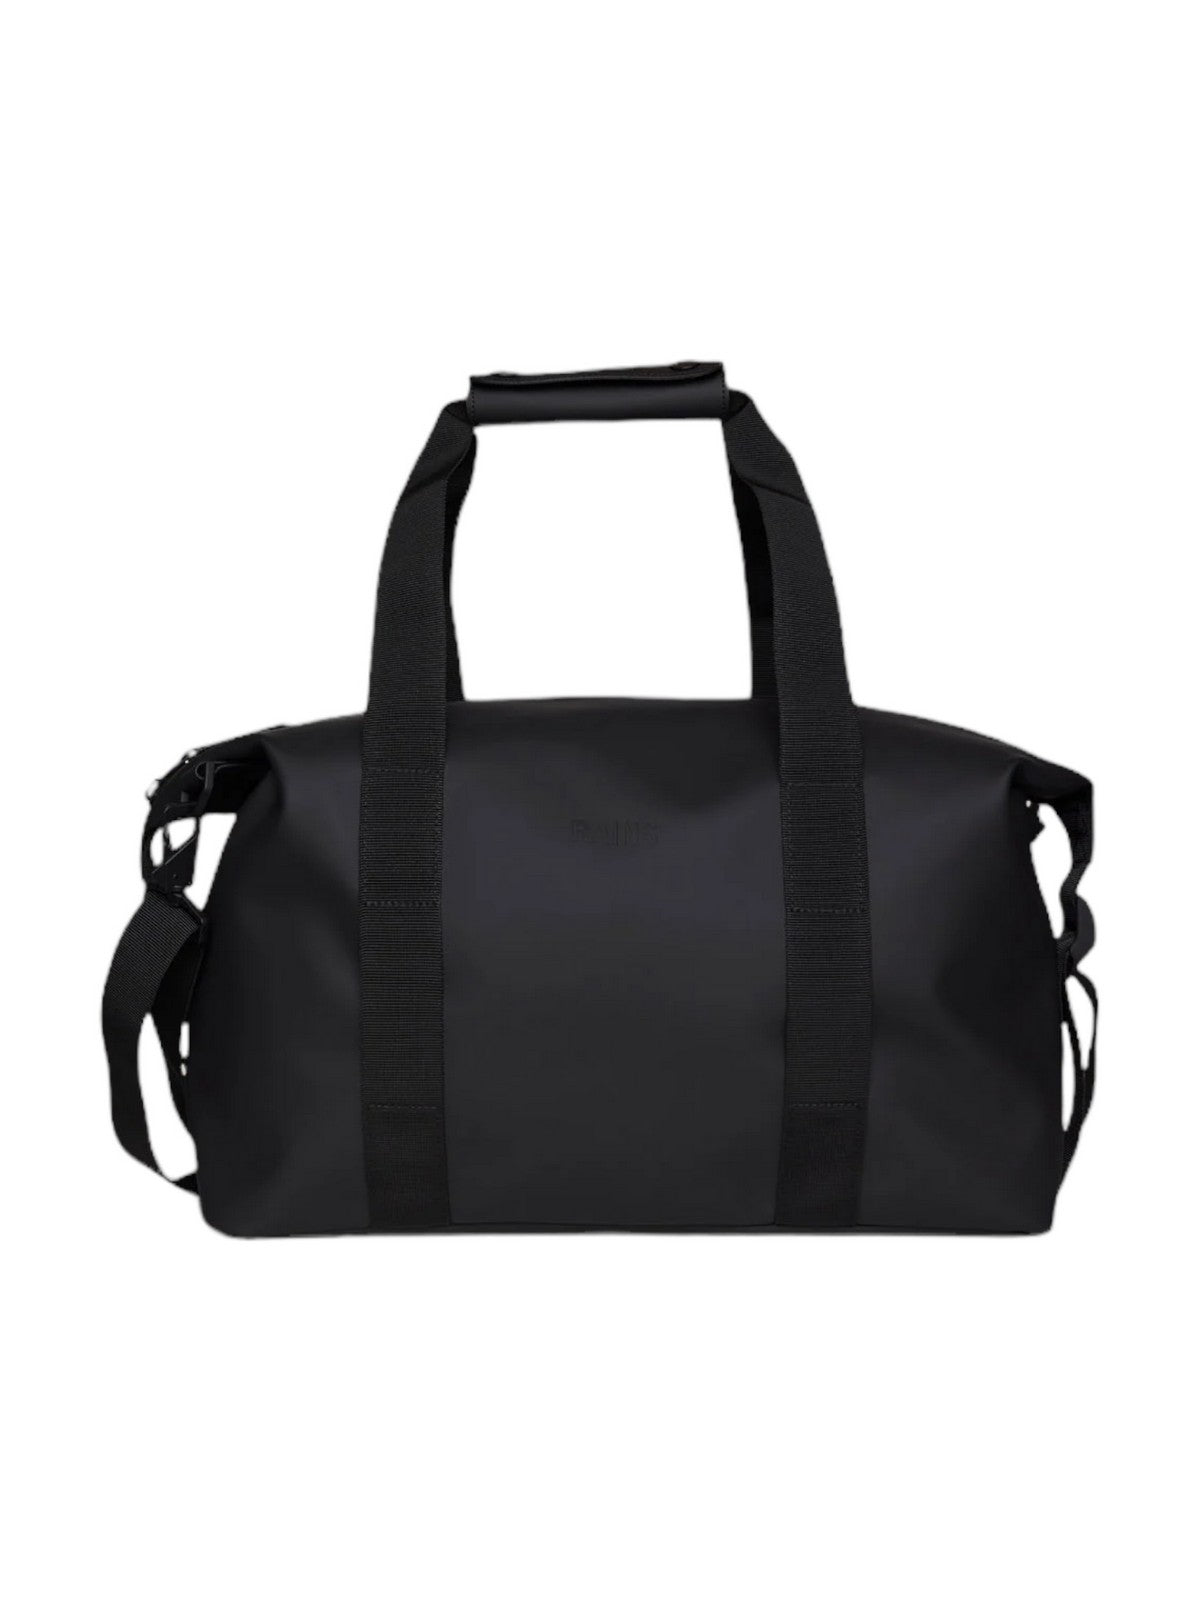 RAINS Valigie e Trolley Unisex adulto Hilo Weekend Bag Small W3 14220 01 Black Nero